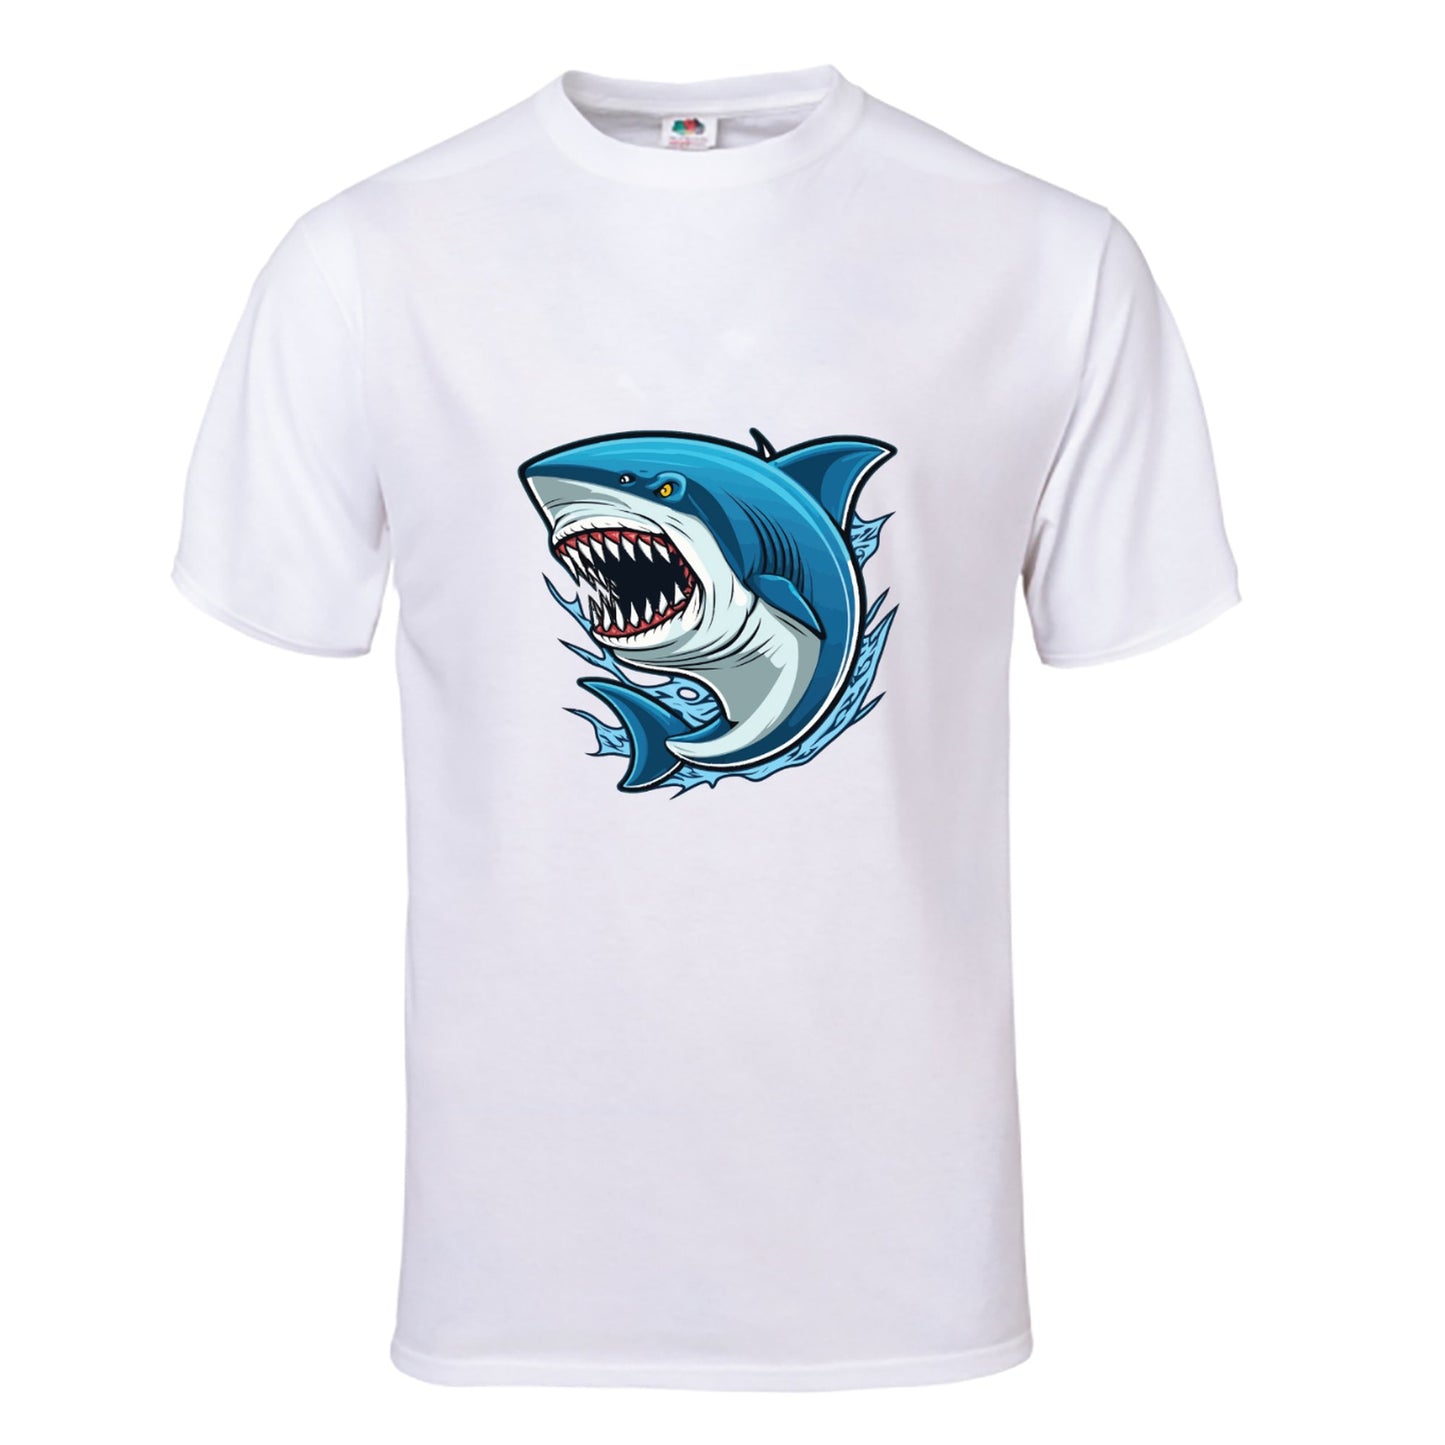 Shark Tee Shirt - Hypno Monkey